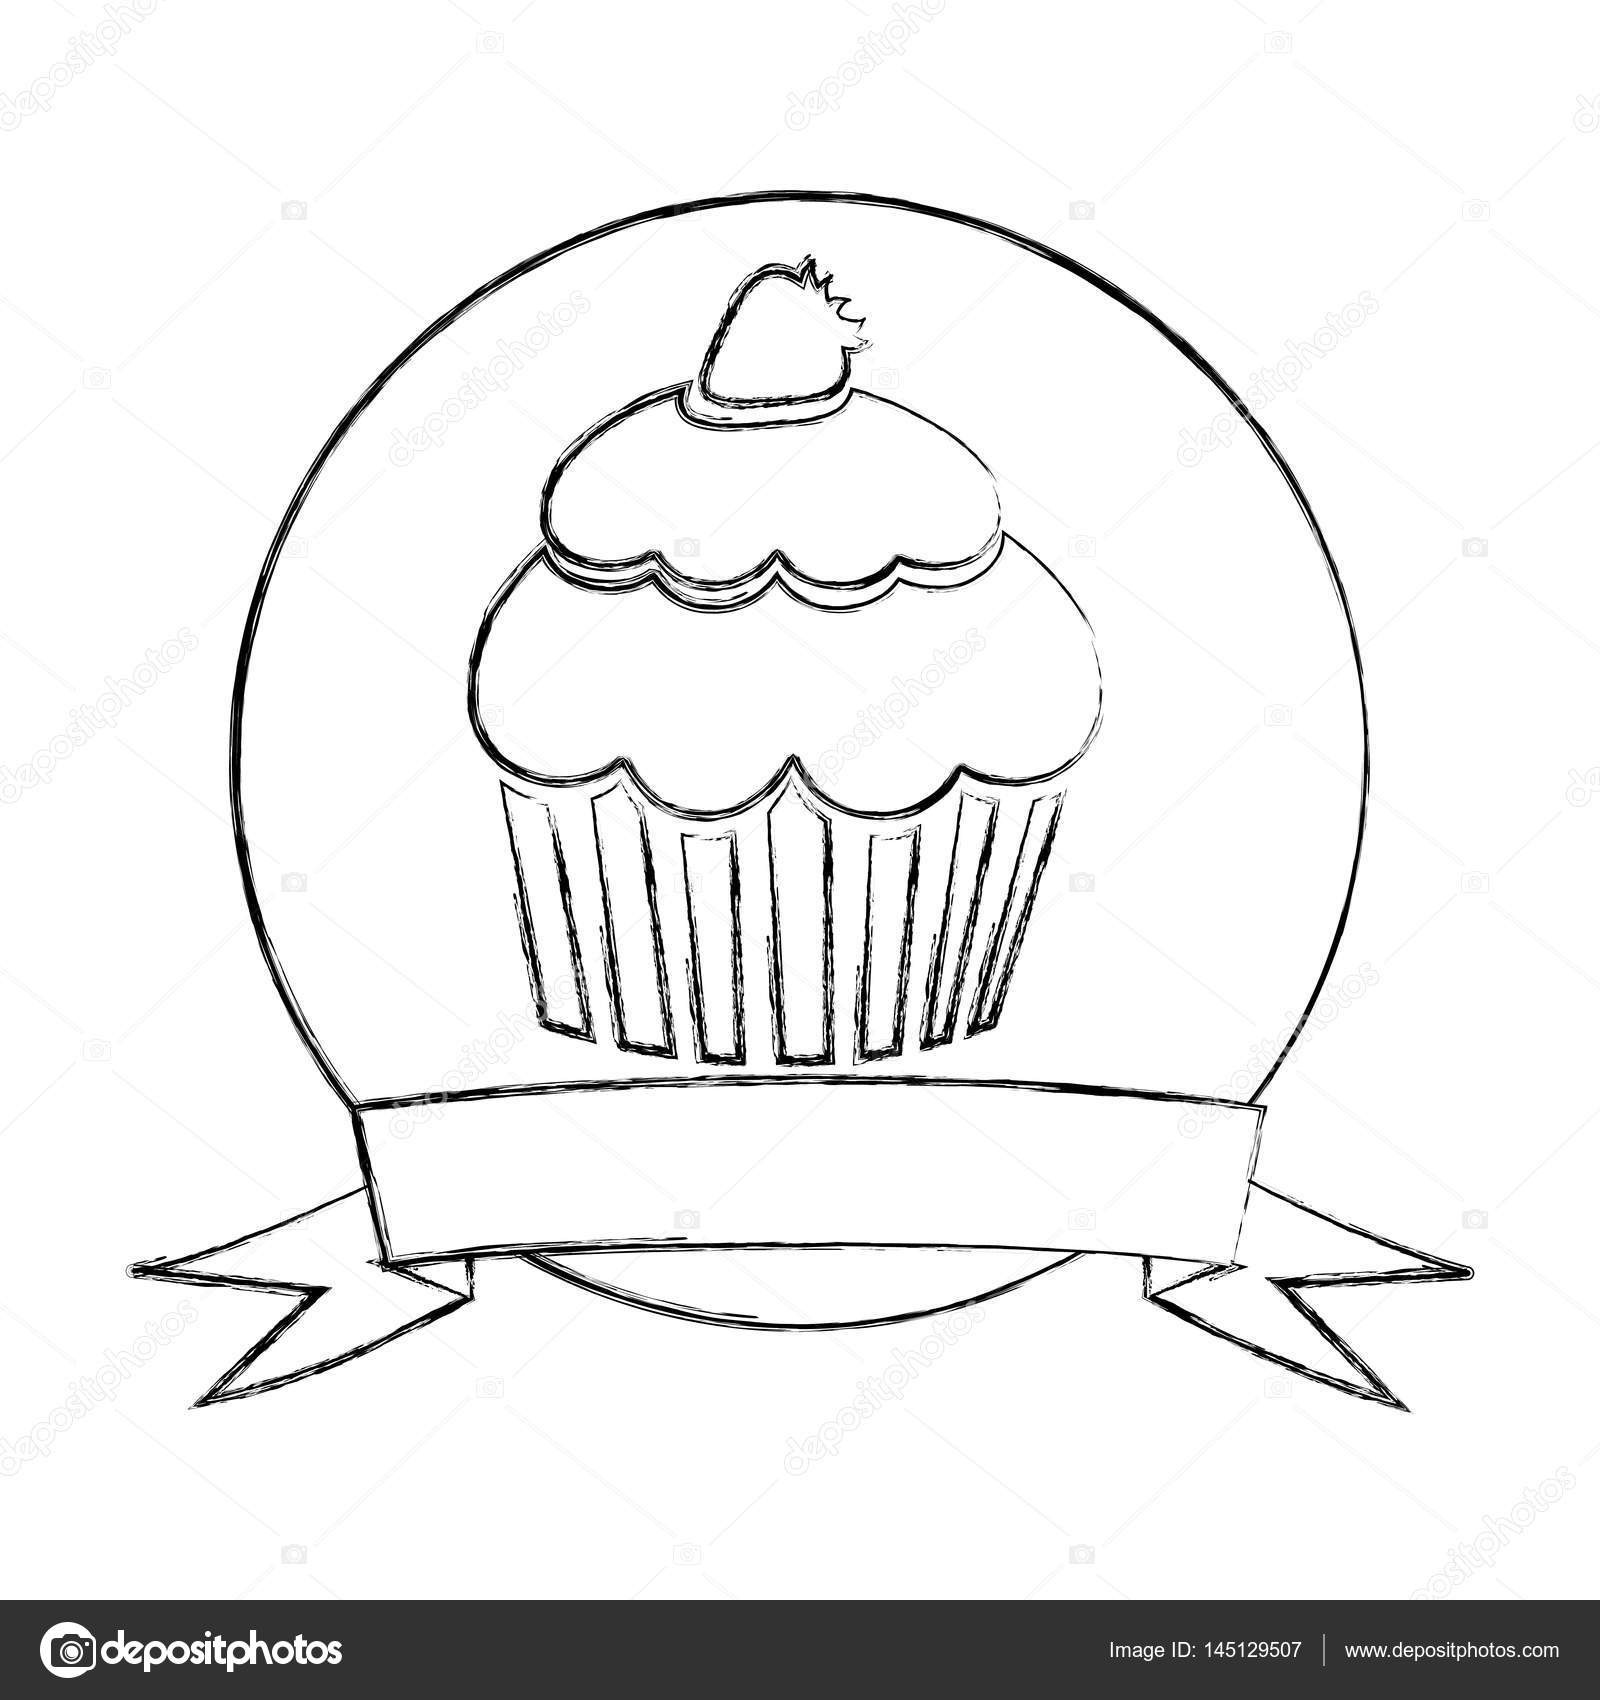 cupcake drawing images 40